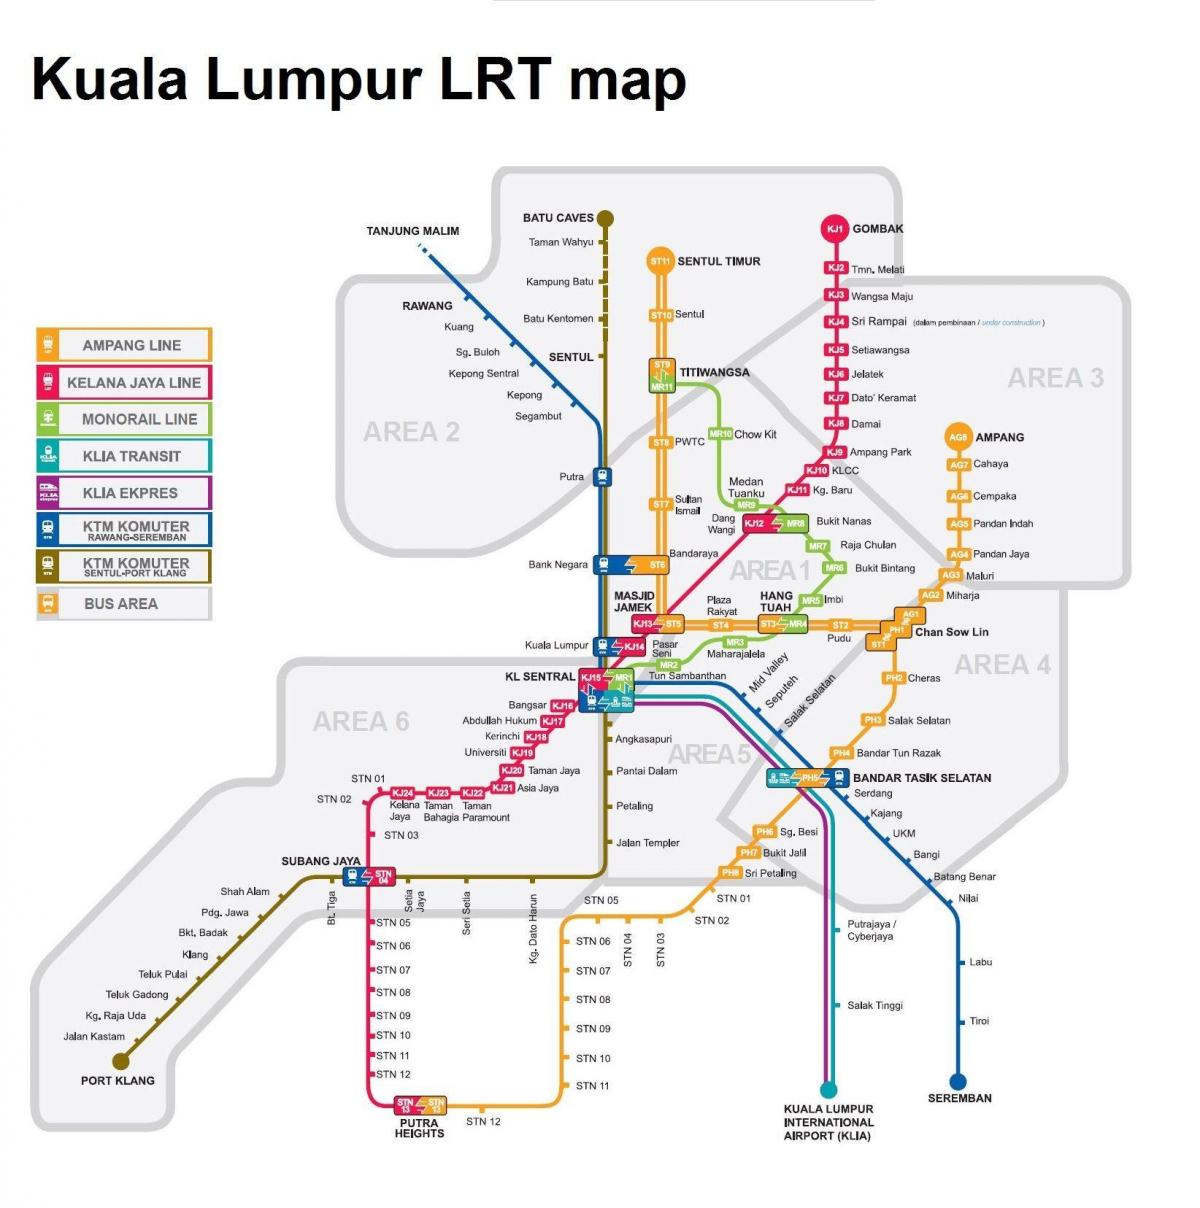 lrt mapa de malasia 2016